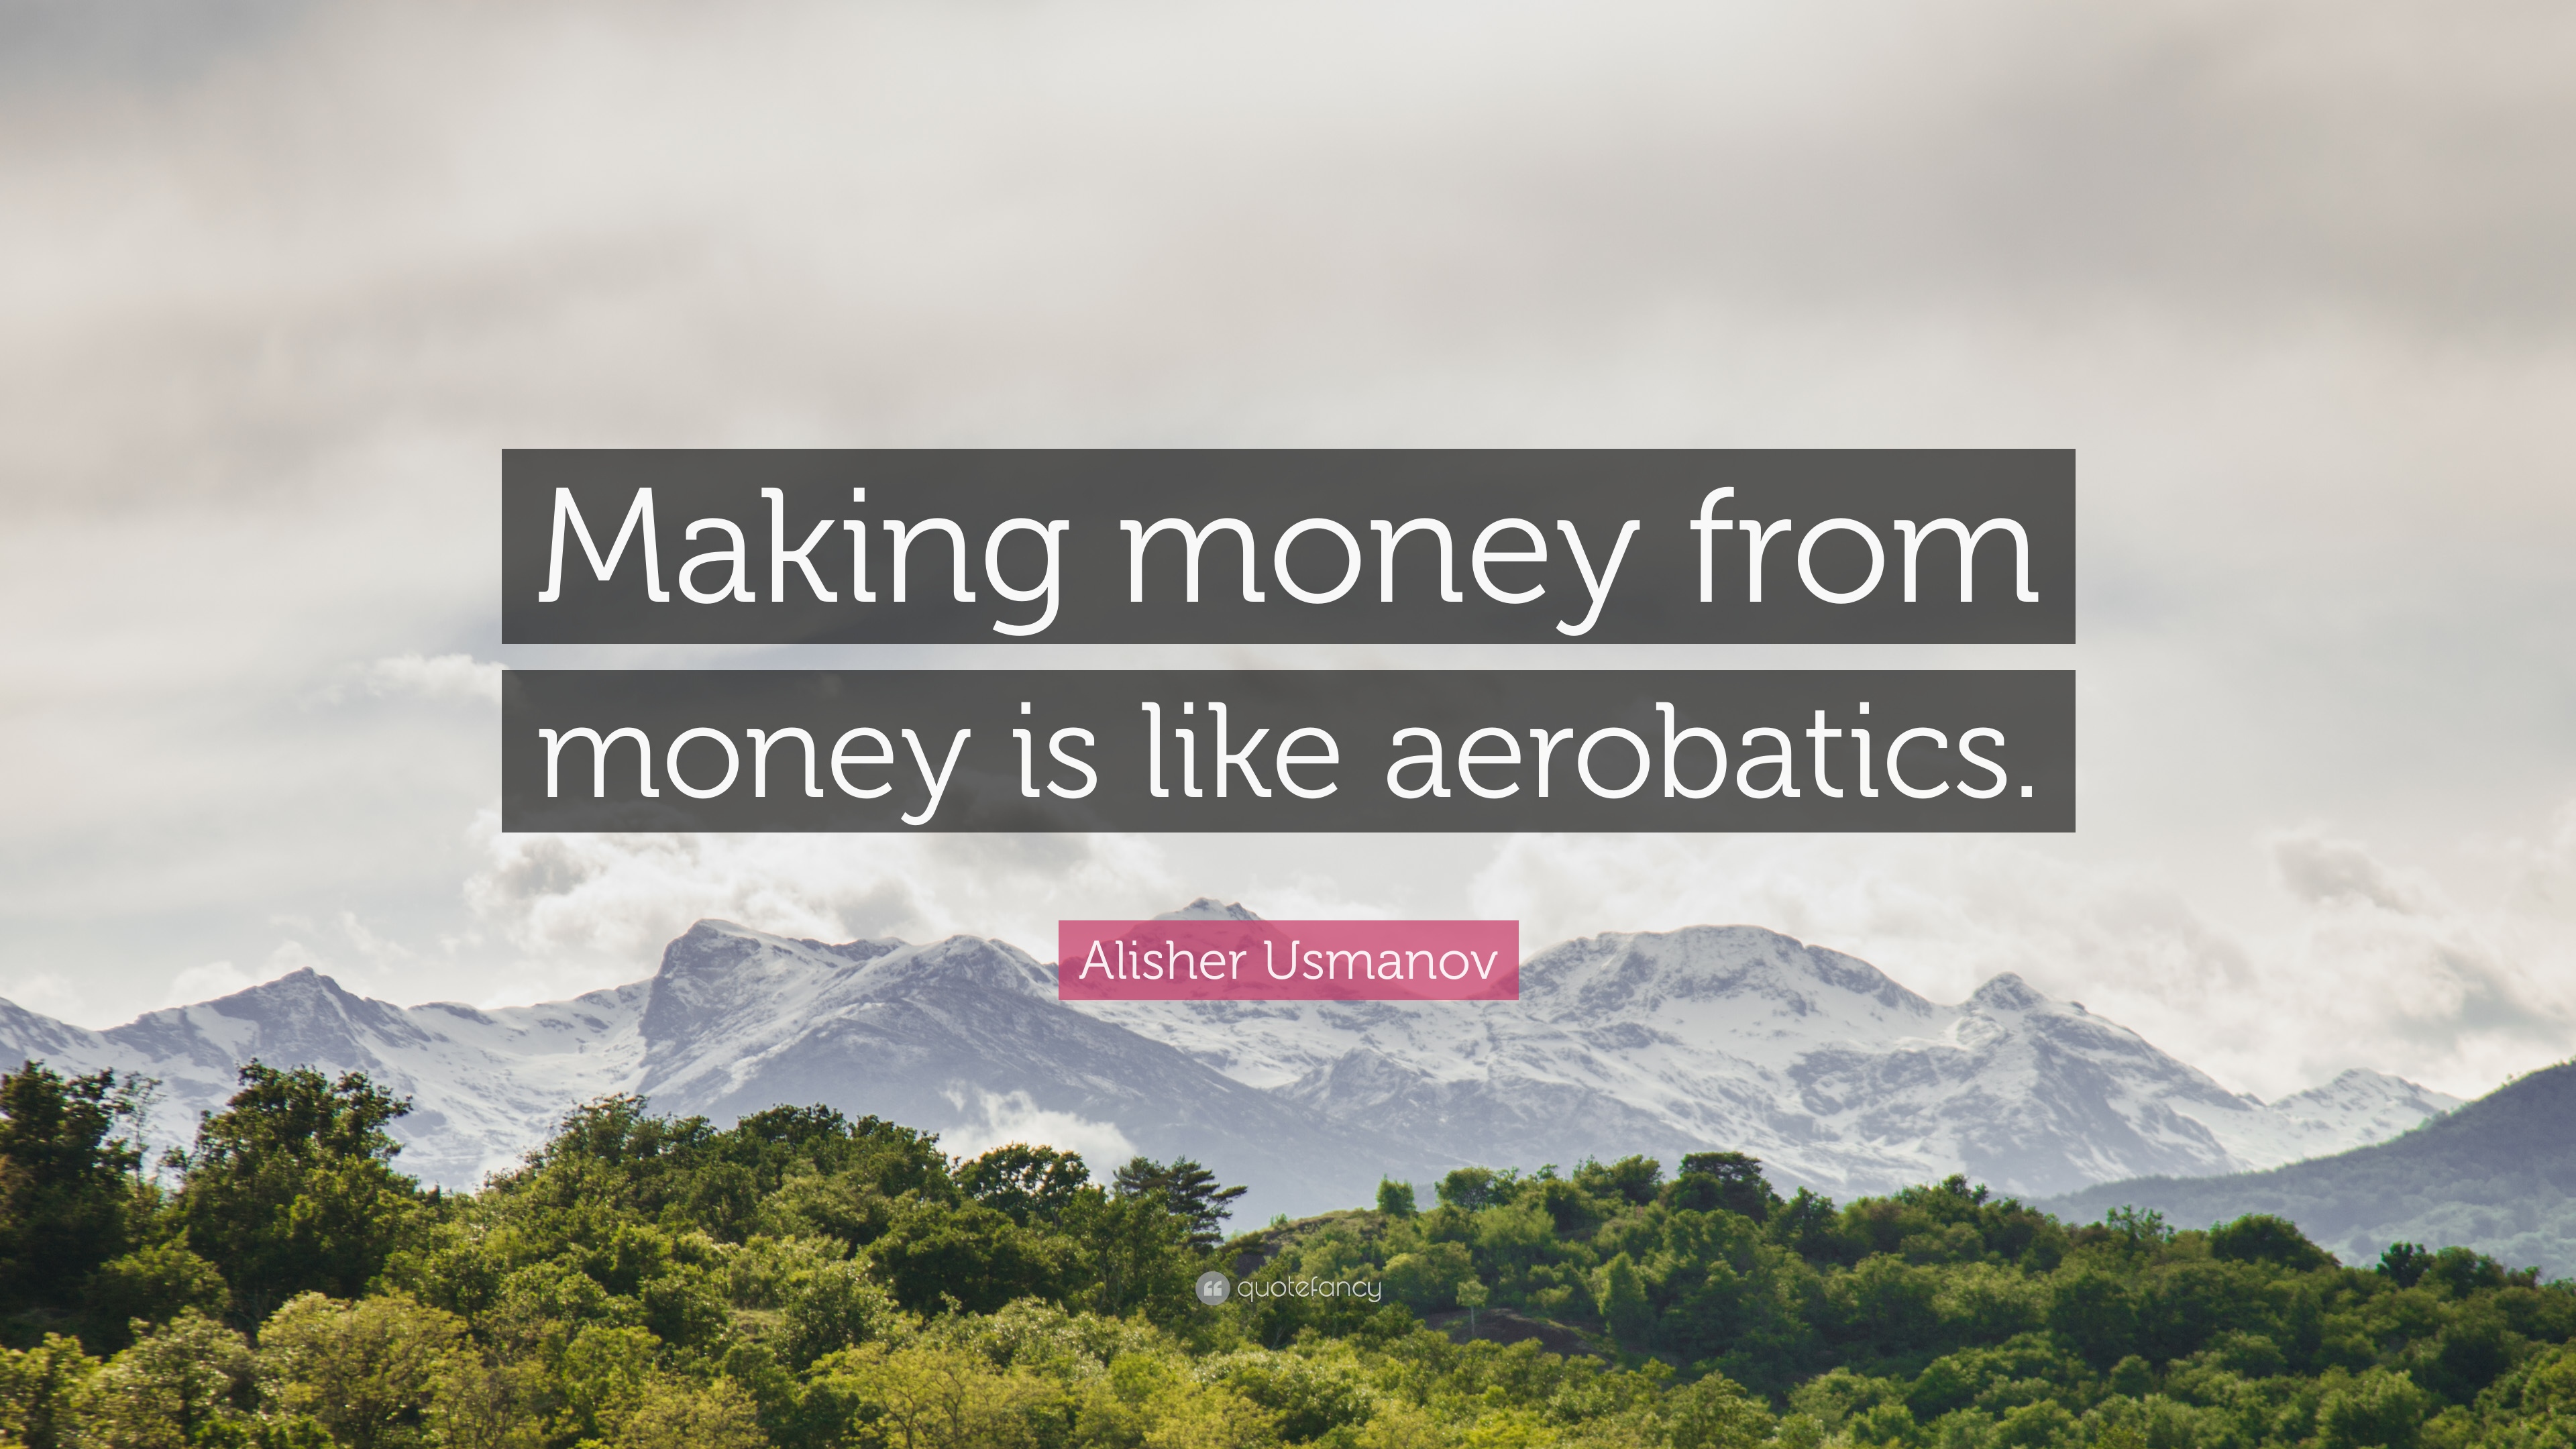 Alisher Usmanov Quote: “Making money from money is like aerobatics